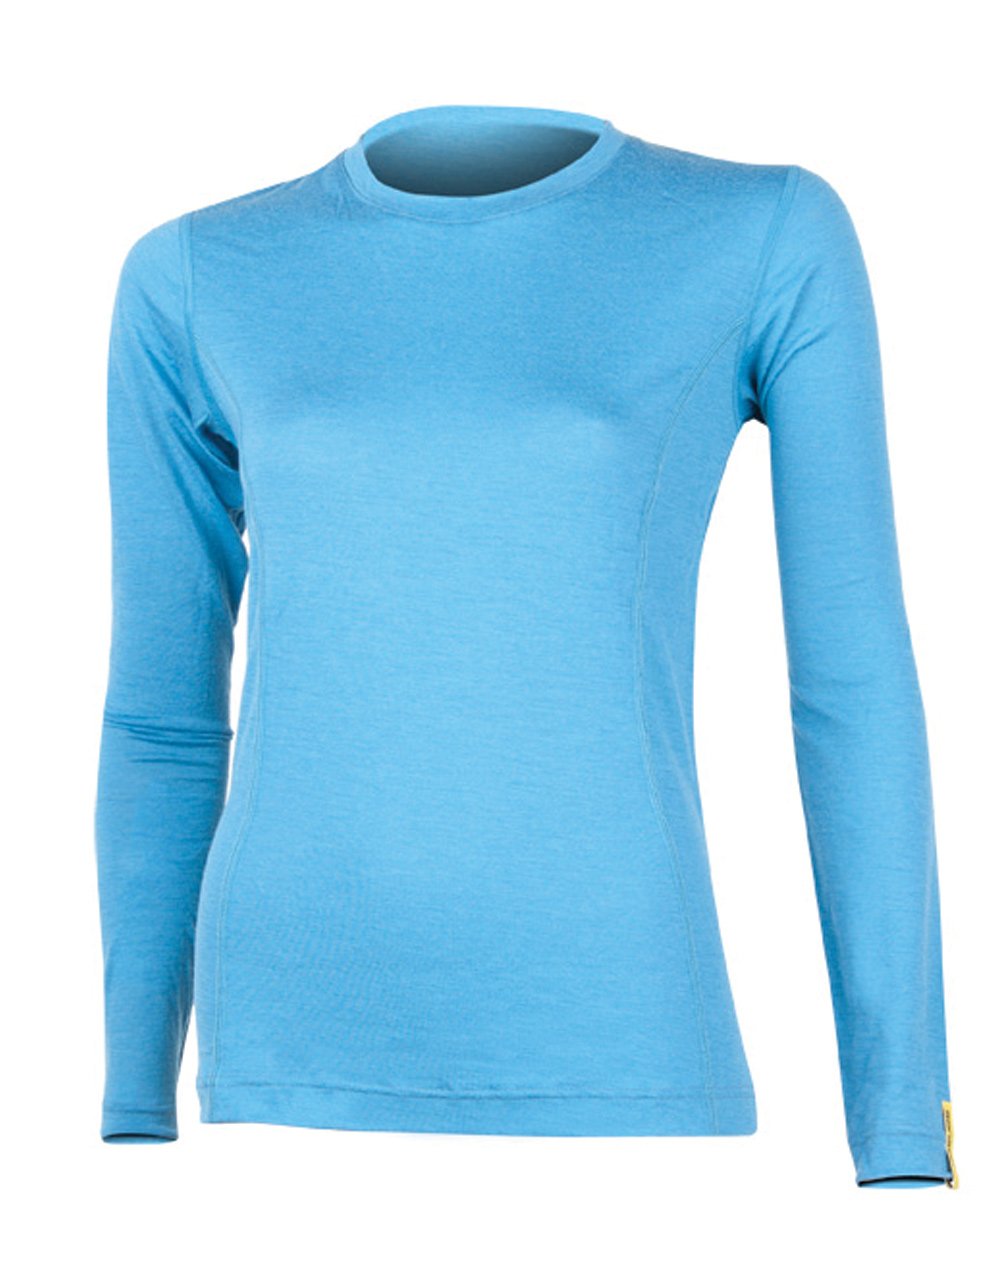 Sensor Merino Wool Damen T-Shirt LS blau S